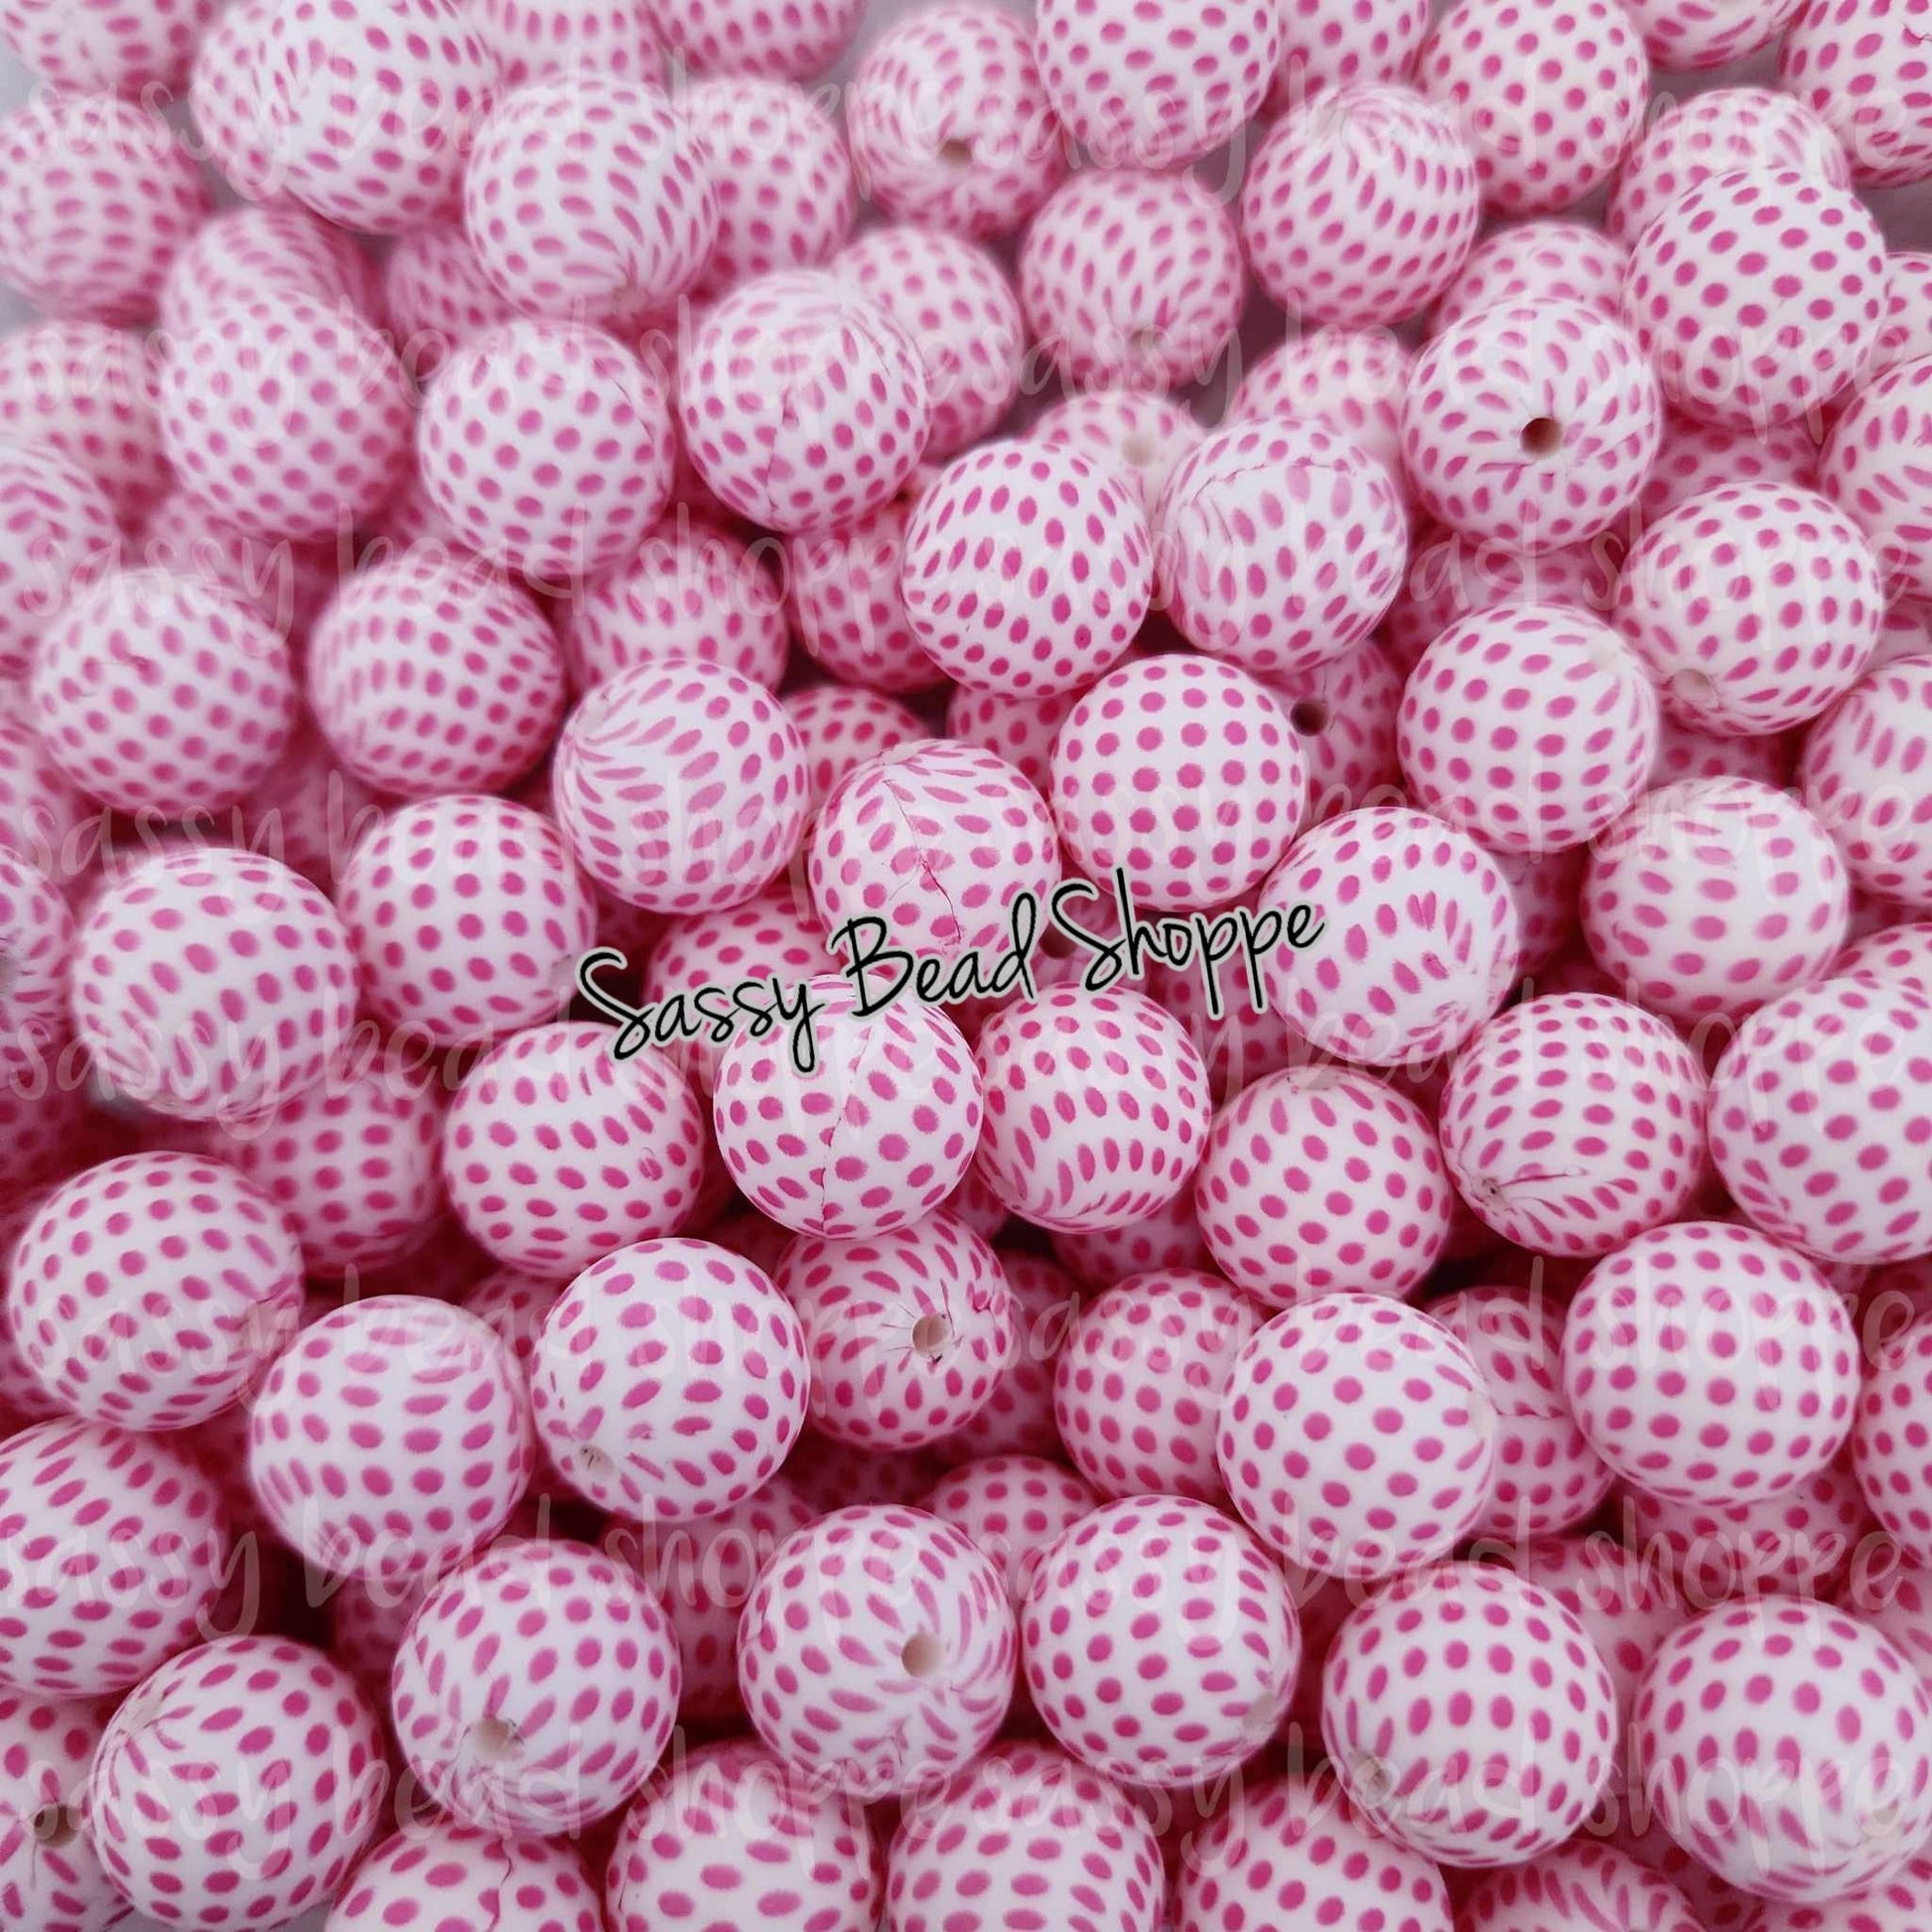 Sassy Bead Shoppe Little Pink Polka Dot Silicone Beads